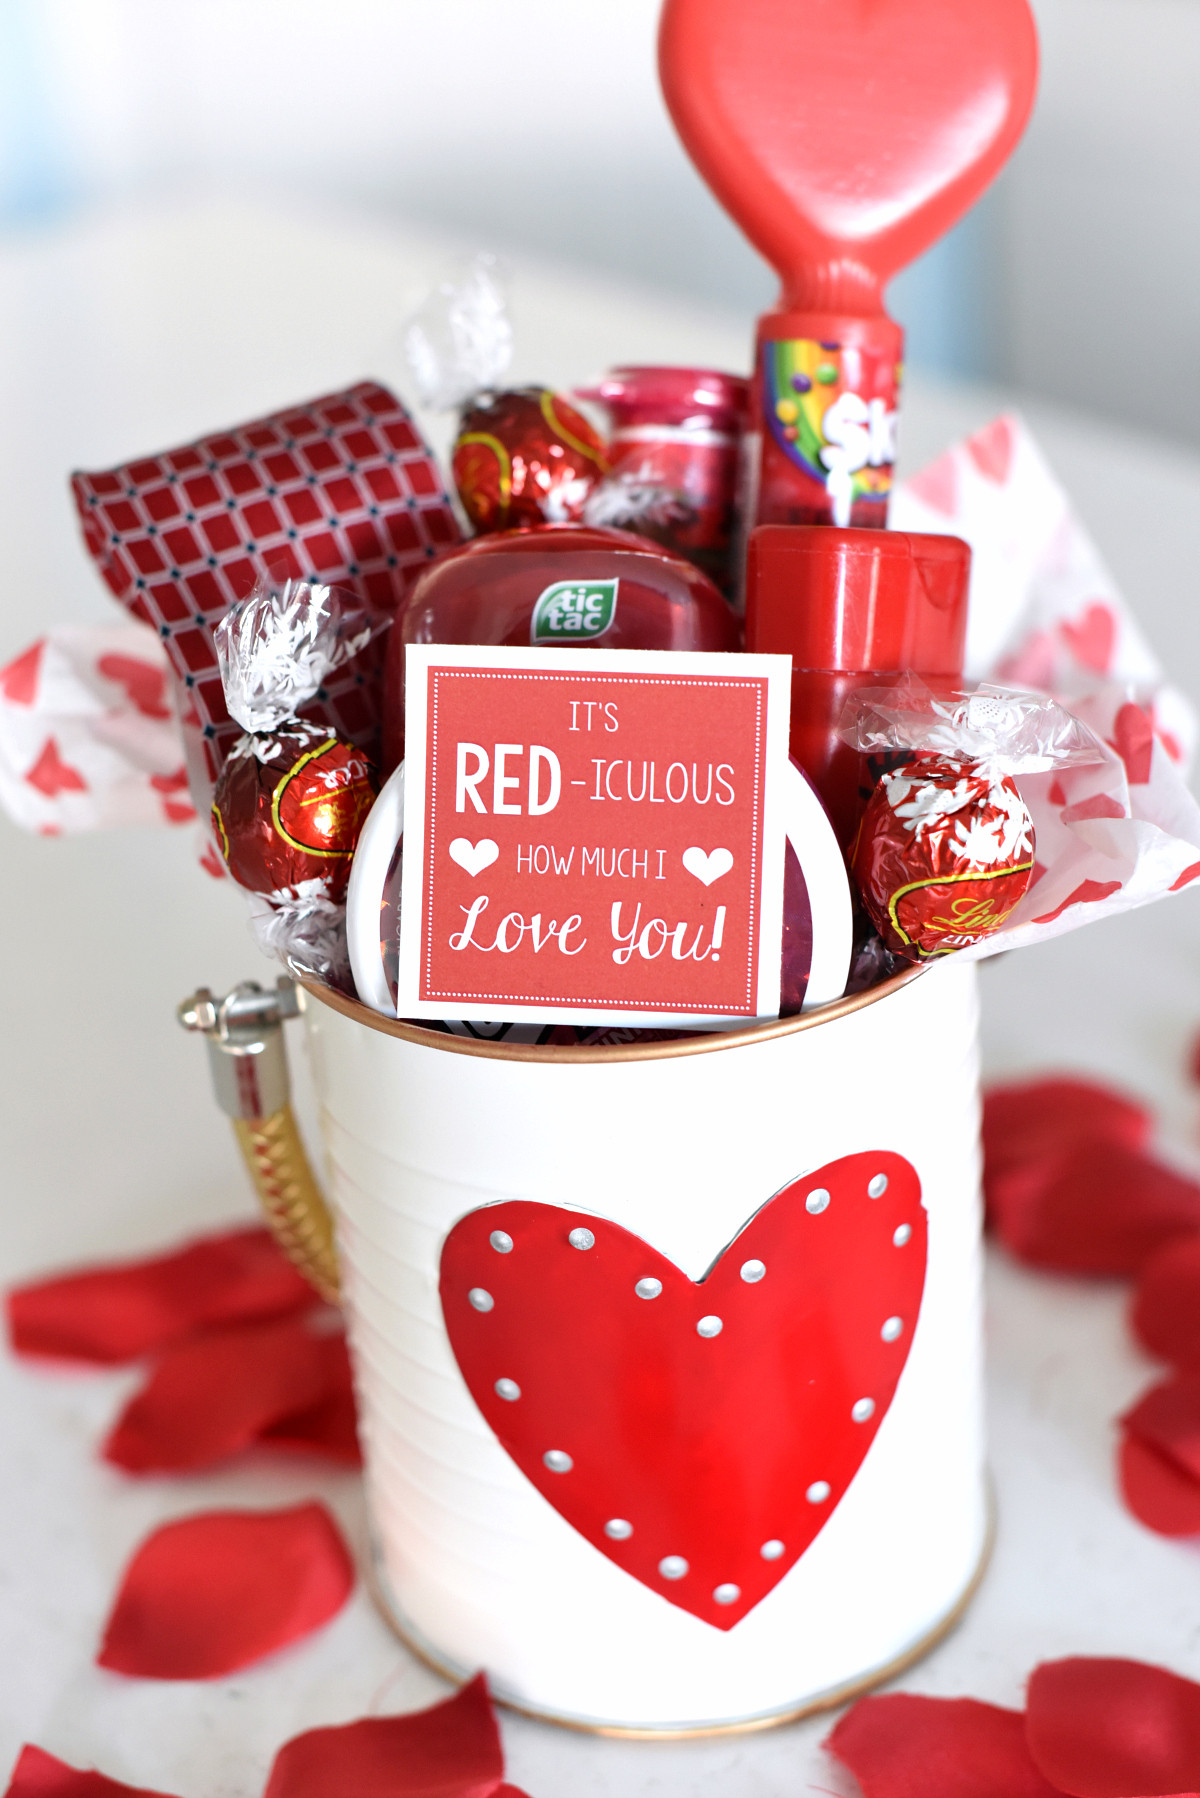 Valentine Day Gift Ideas For Him Pinterest
 Cute Valentine s Day Gift Idea RED iculous Basket